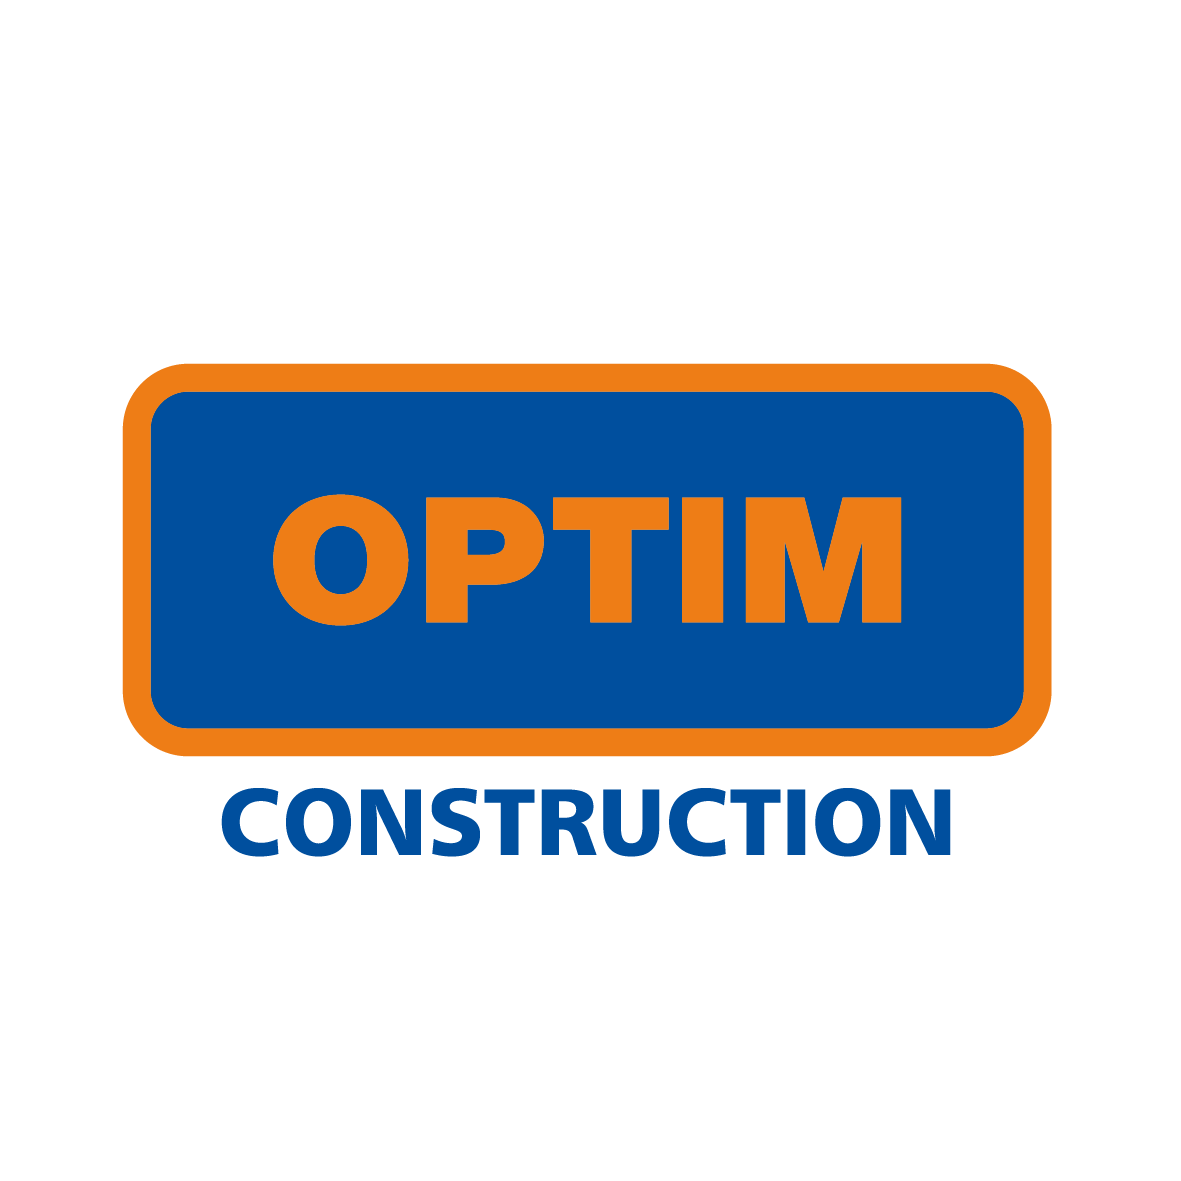 OPTIM Construction